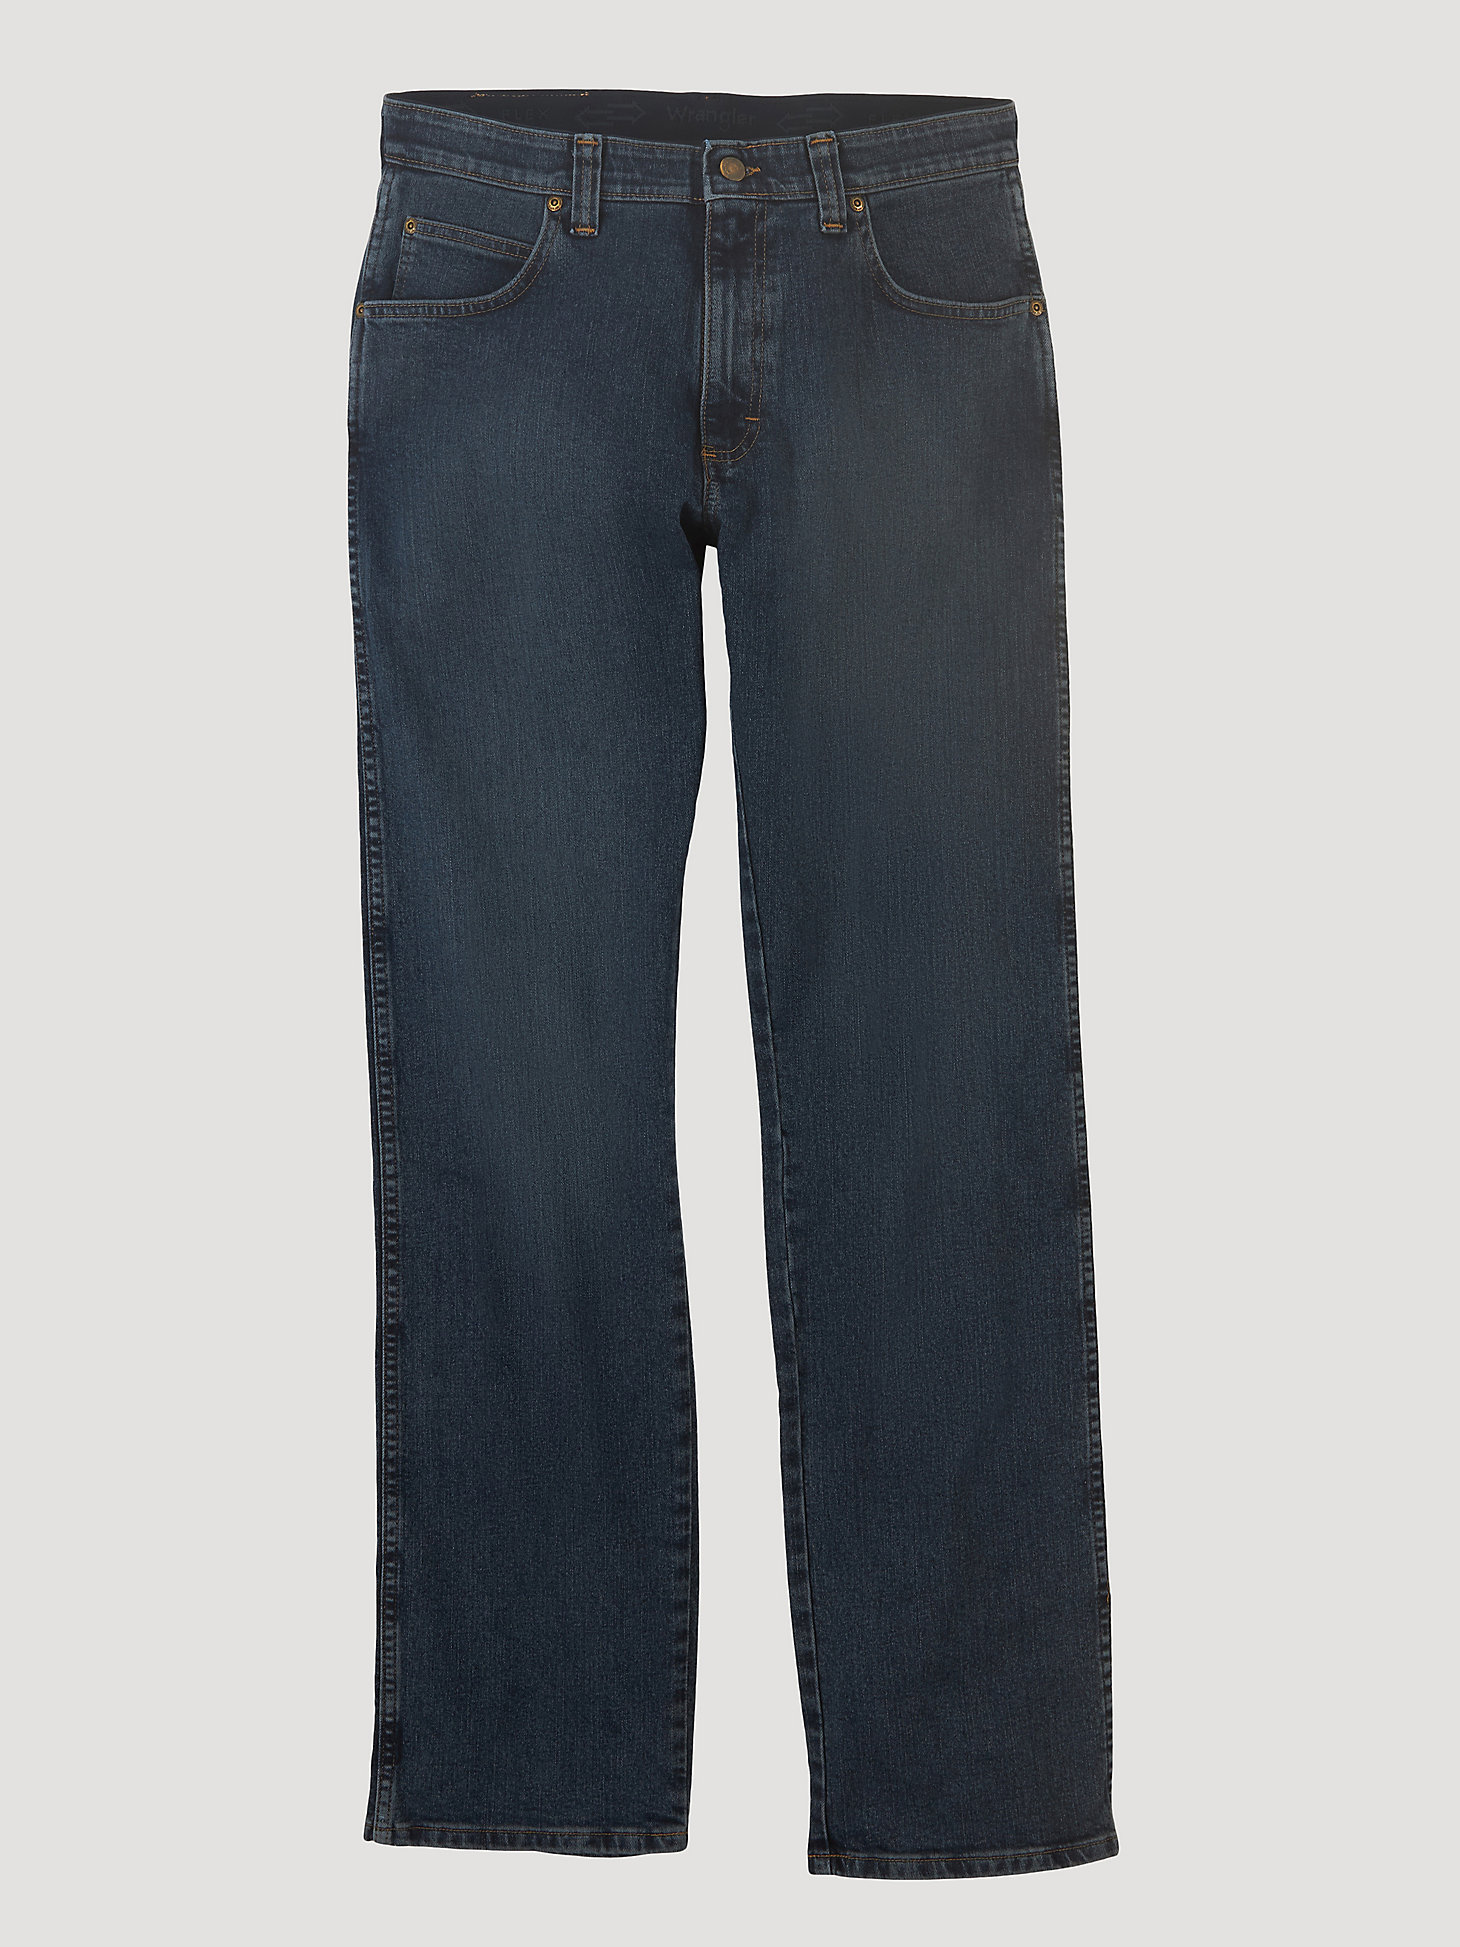 Wrangler Rugged Wear® Performance Series Regular Fit Jean in Mid Indigo alternative view 5